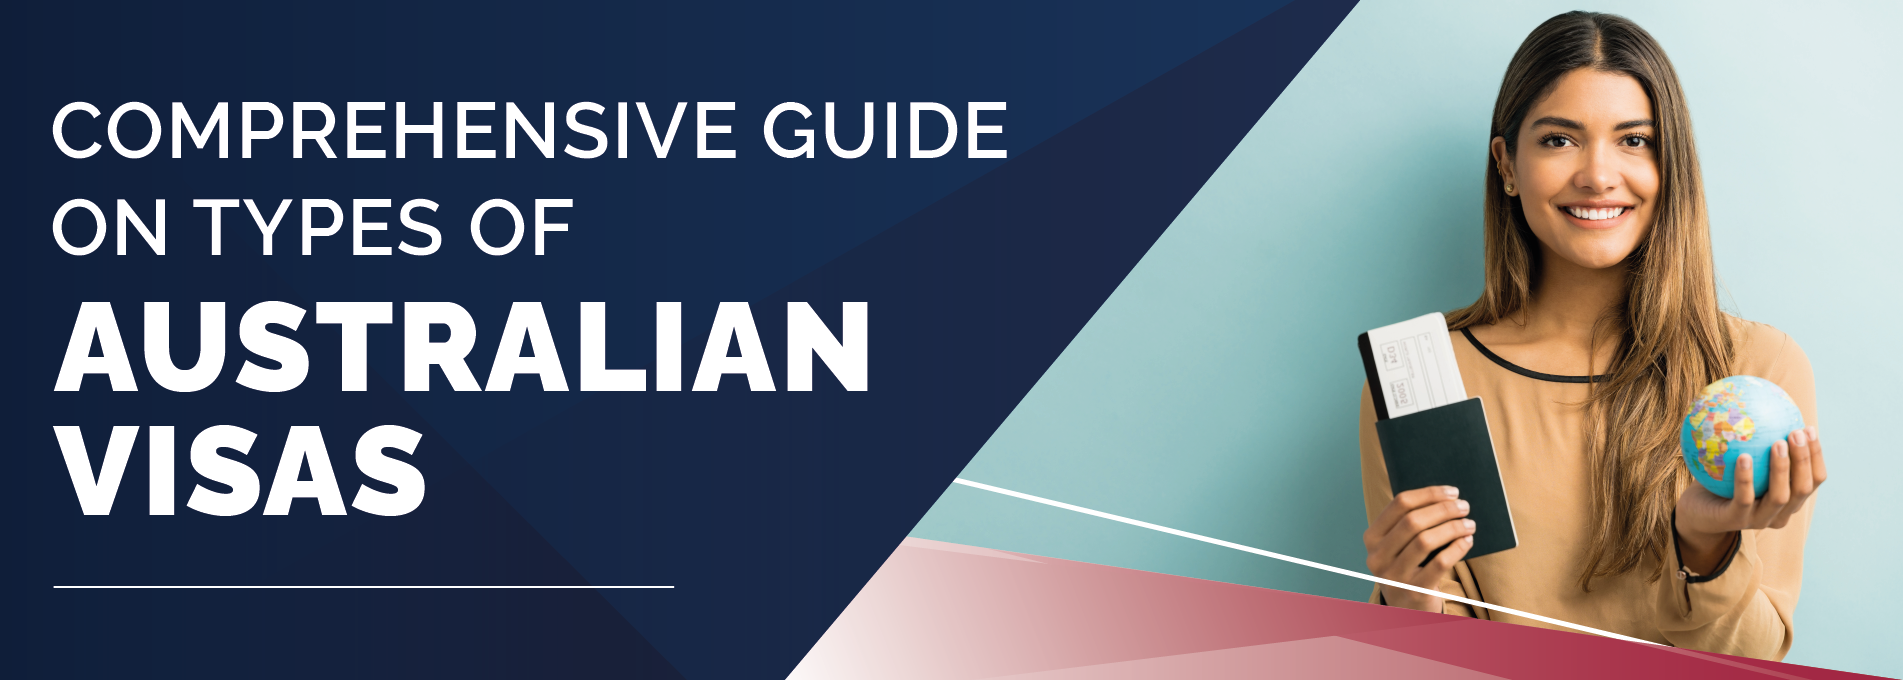 Comprehensive Guide on Types of Australian Visas